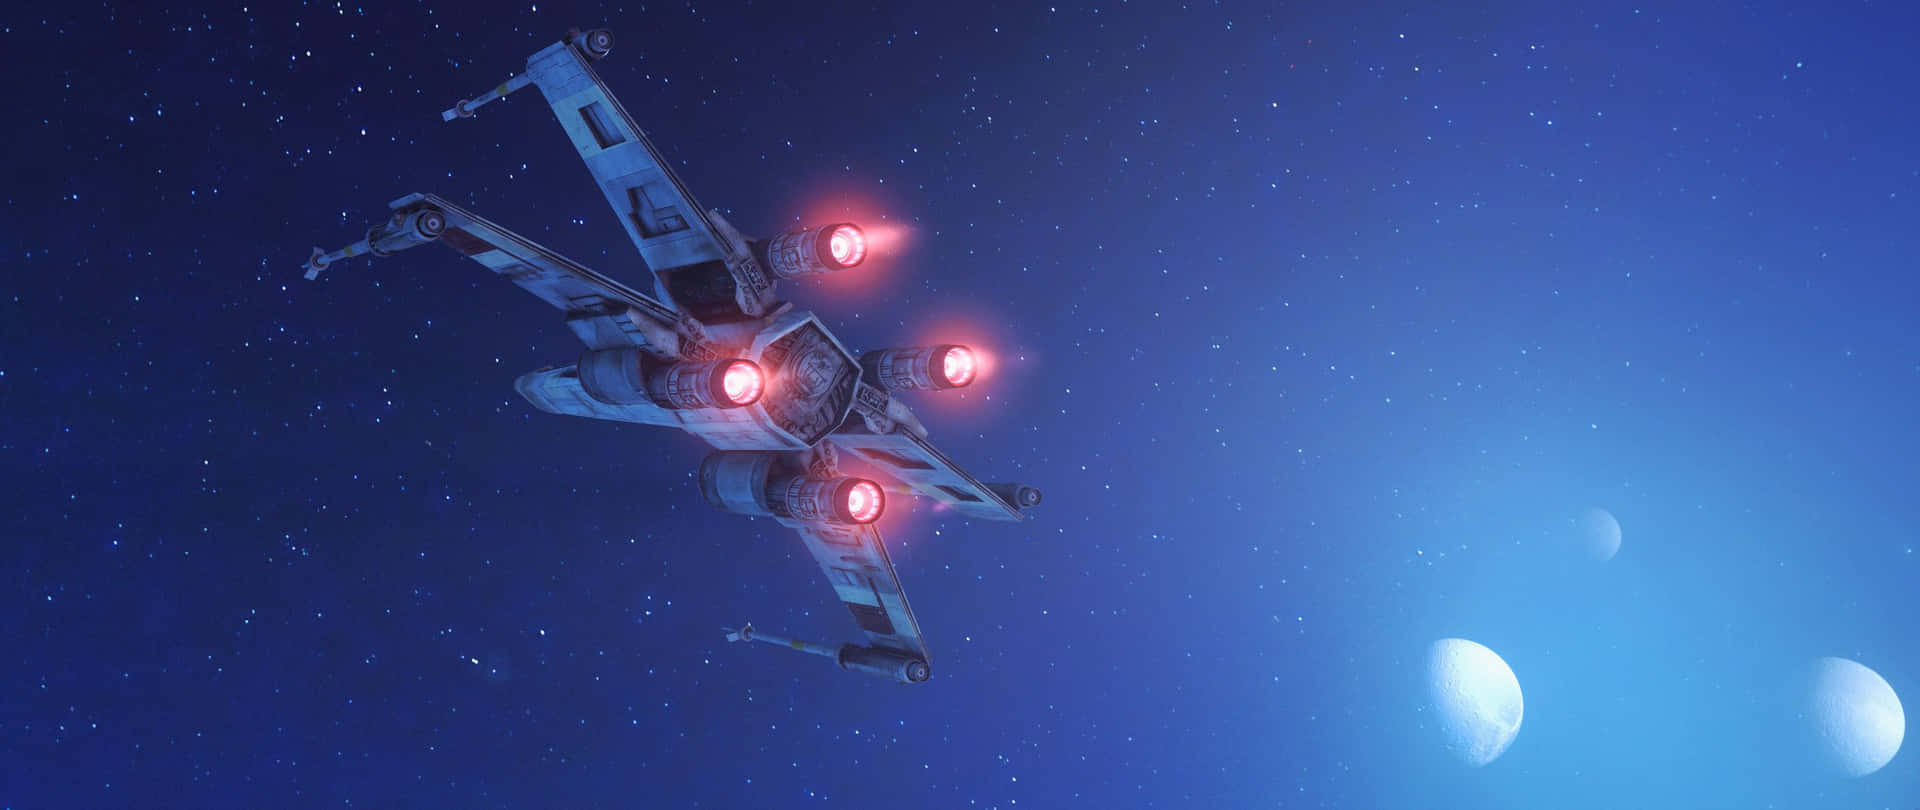 Cool Spaceship Star Wars 2560 X 1080 Wallpaper